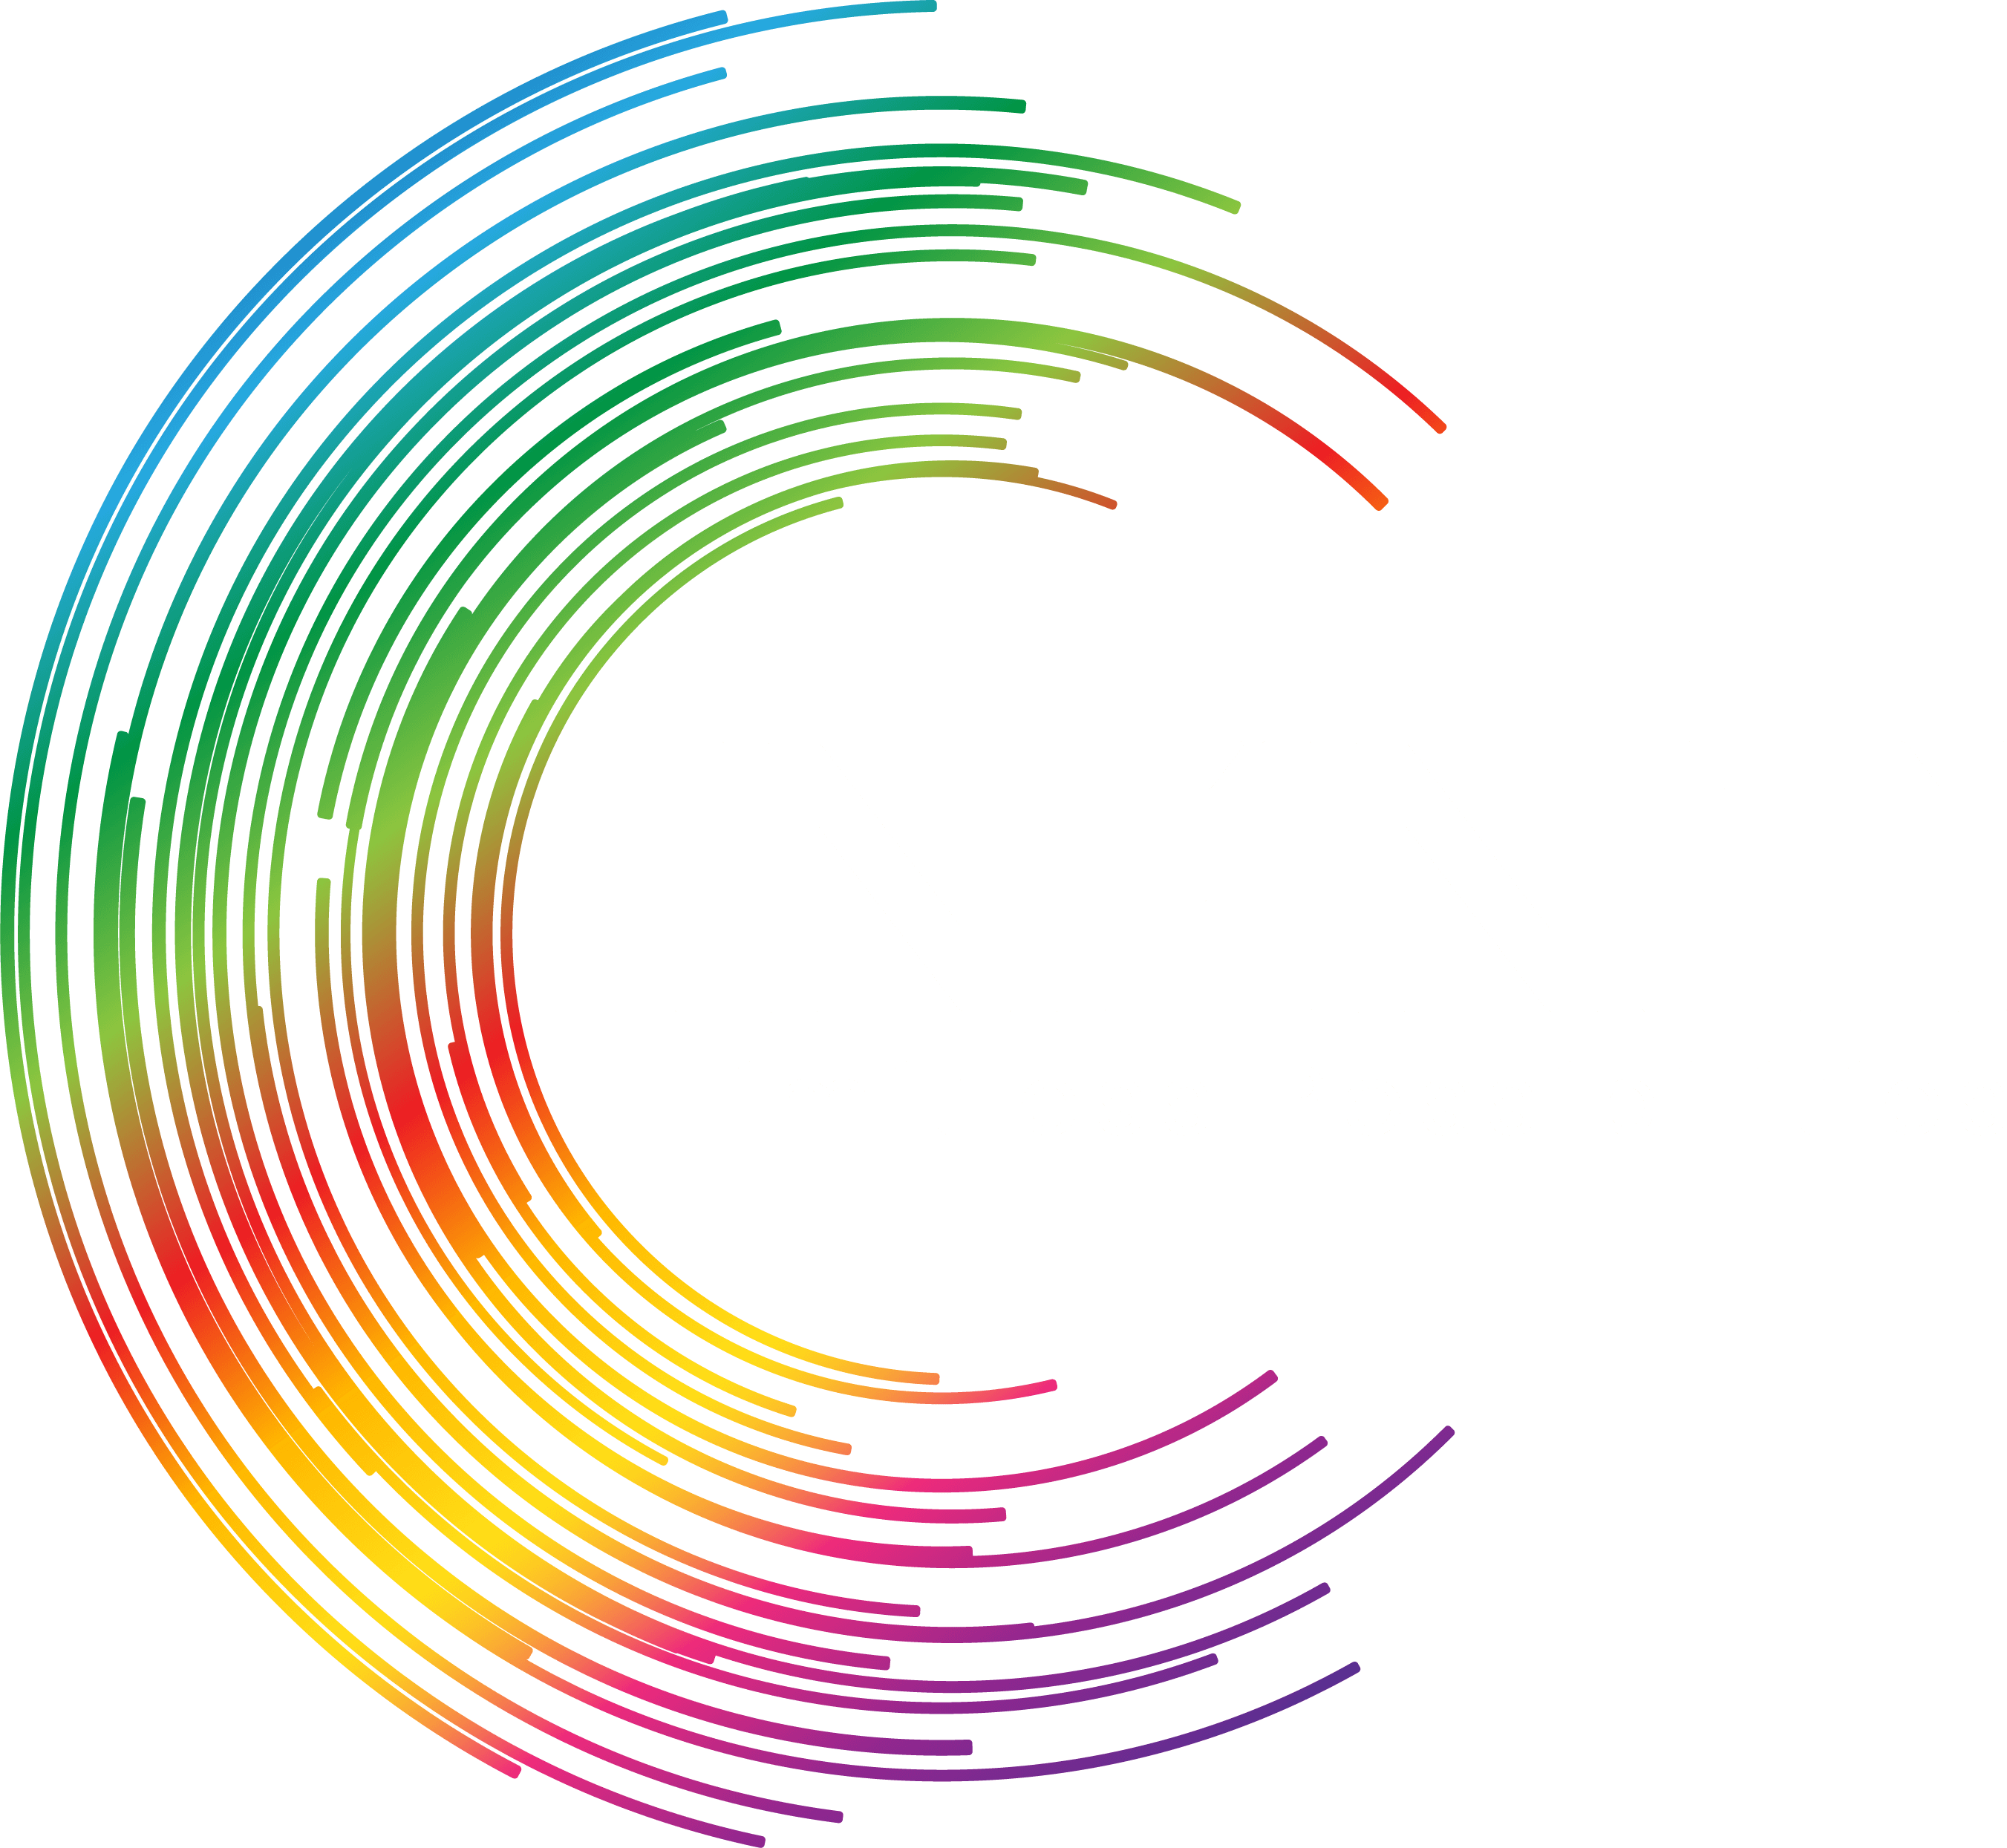 INFINITI Limitless Possibilities